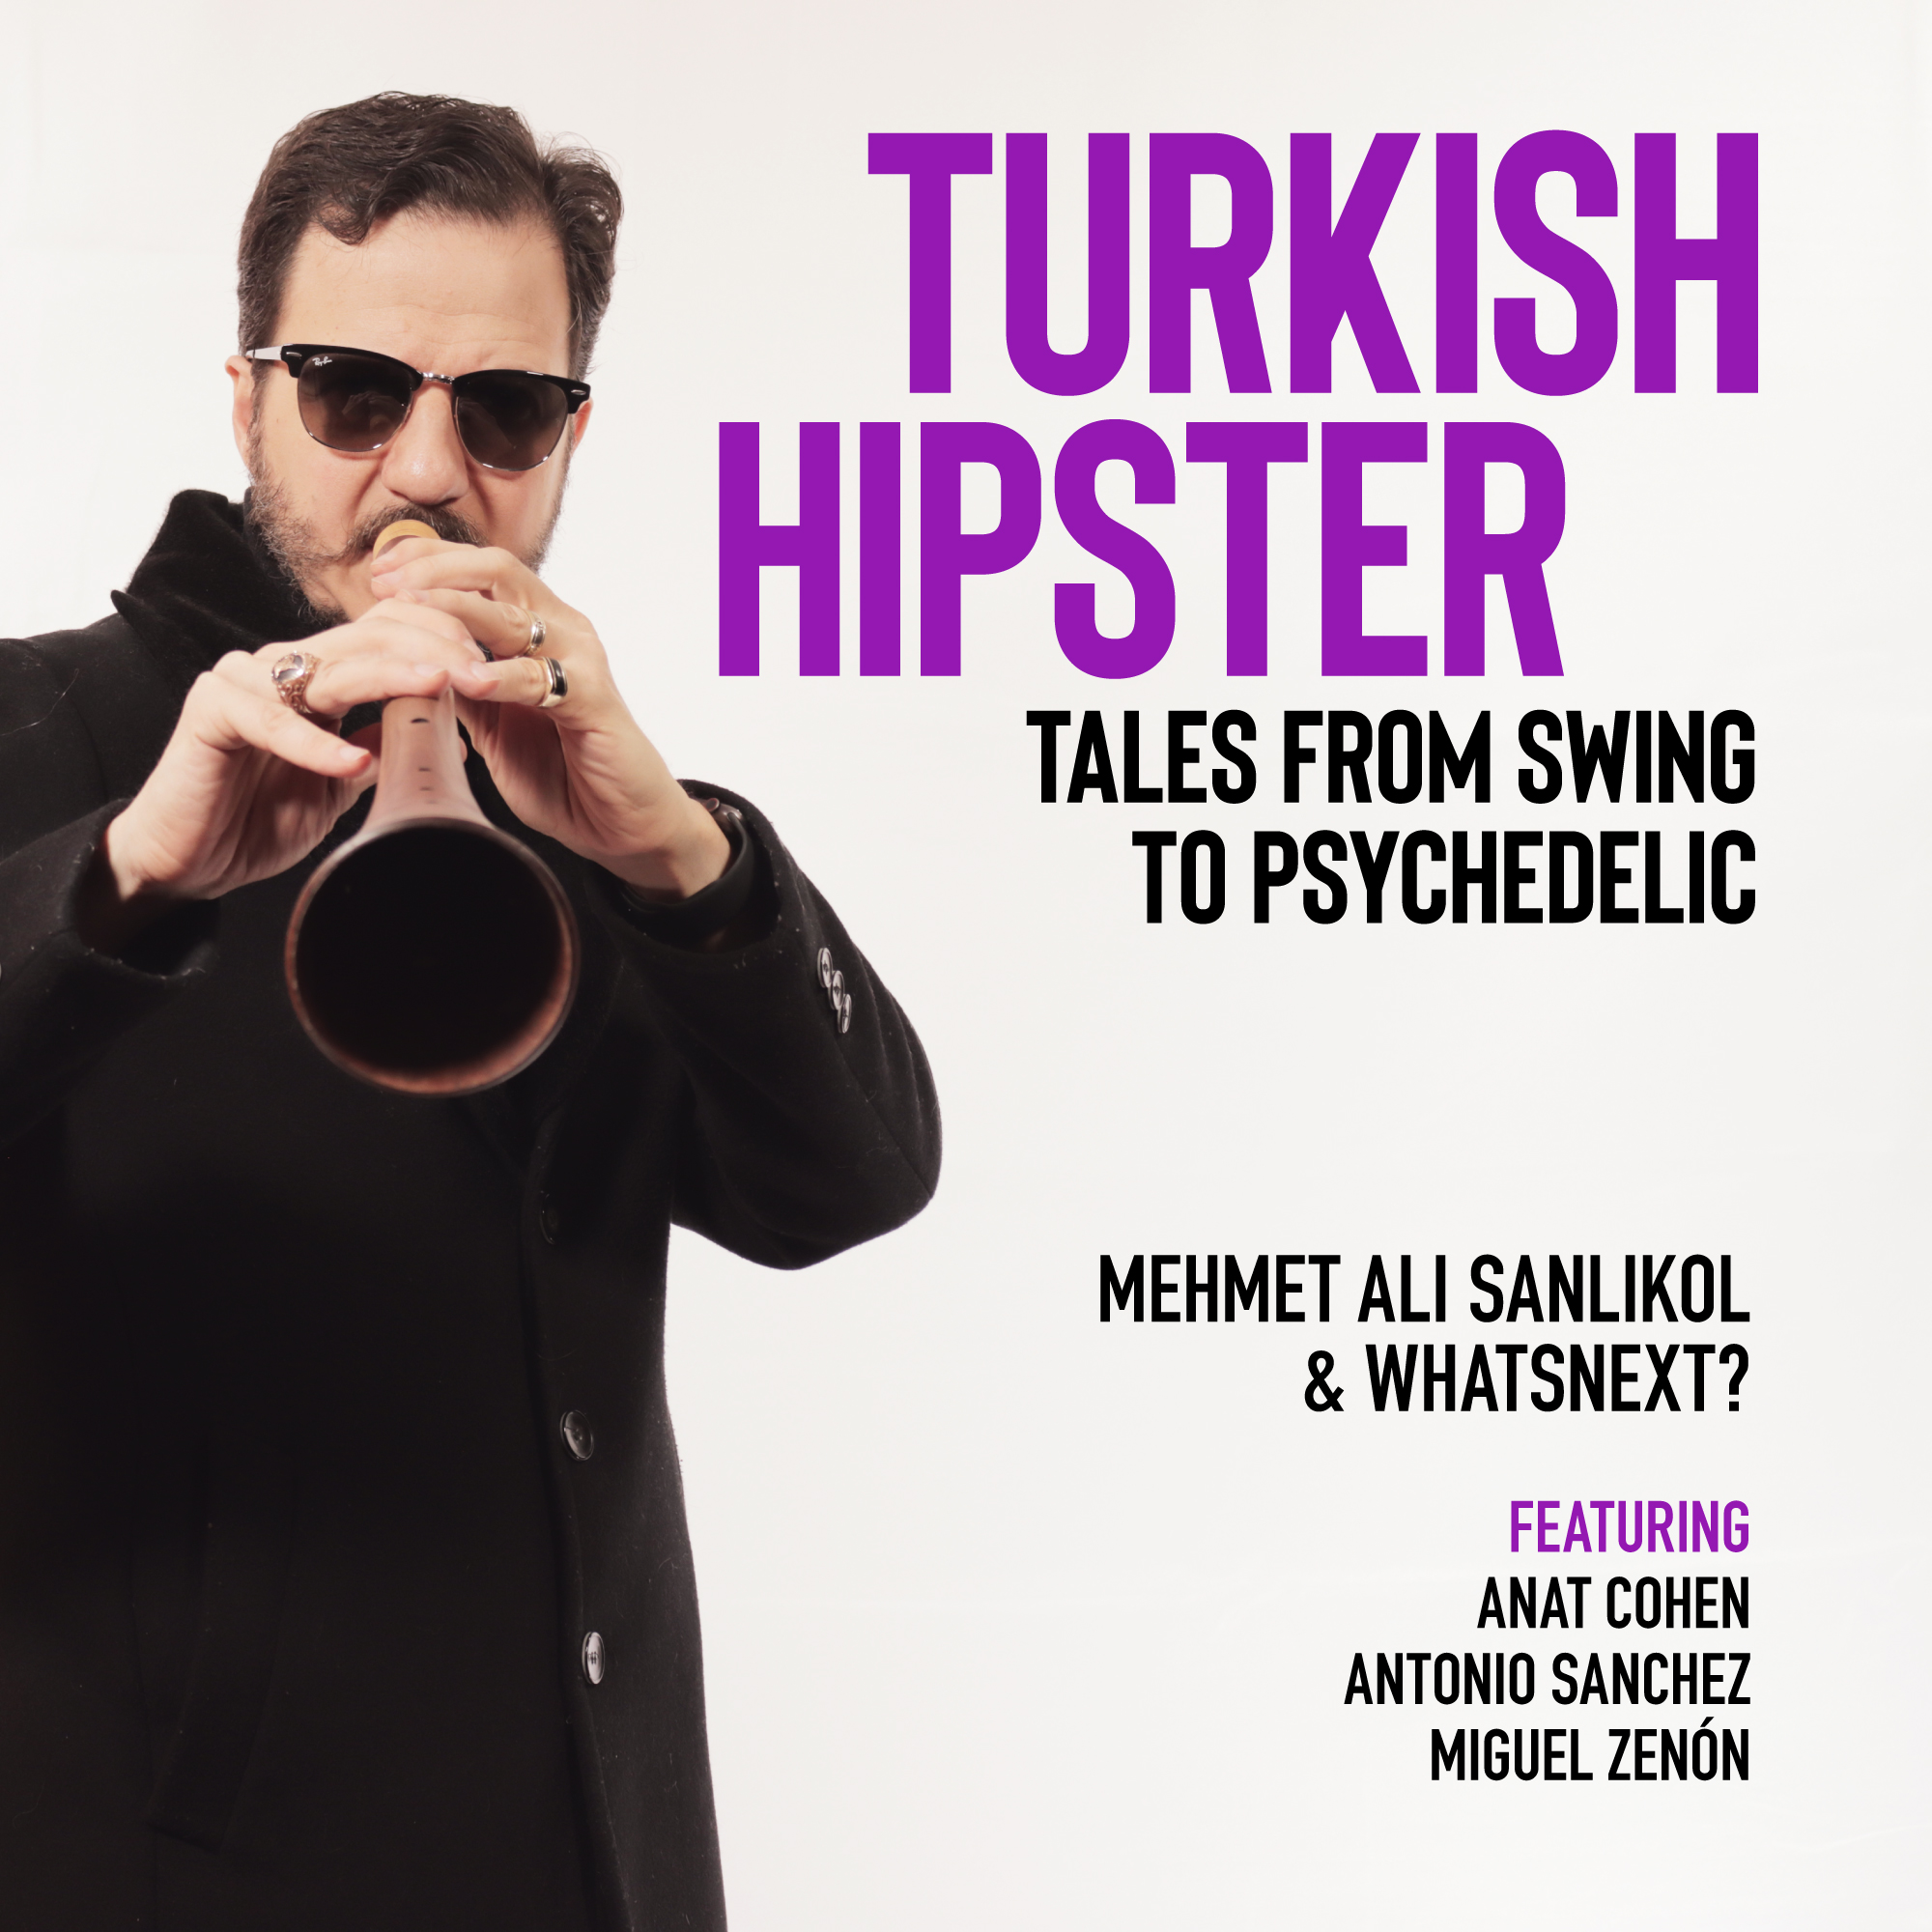 Mehmet Ali Sanlıkol & Whatsnext? Turkish Hipster